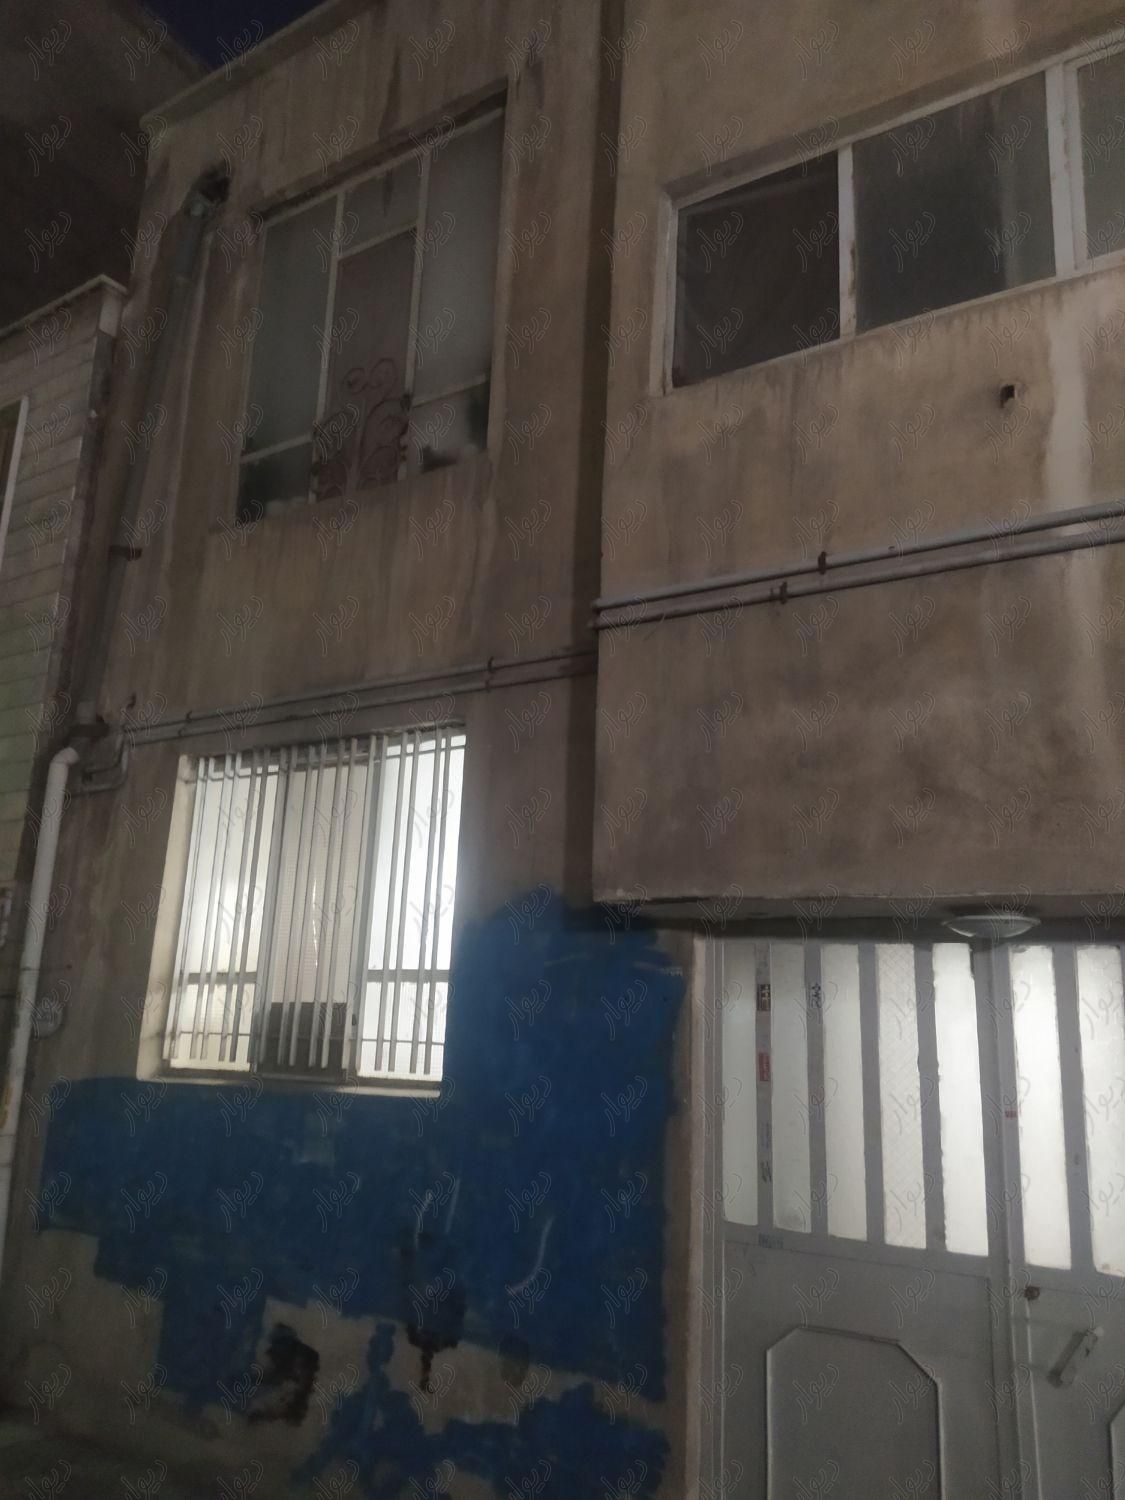 خانه کلنگی ۸۴ متر  دو طبقه|فروش زمین و کلنگی|تهران, شادآباد|دیوار